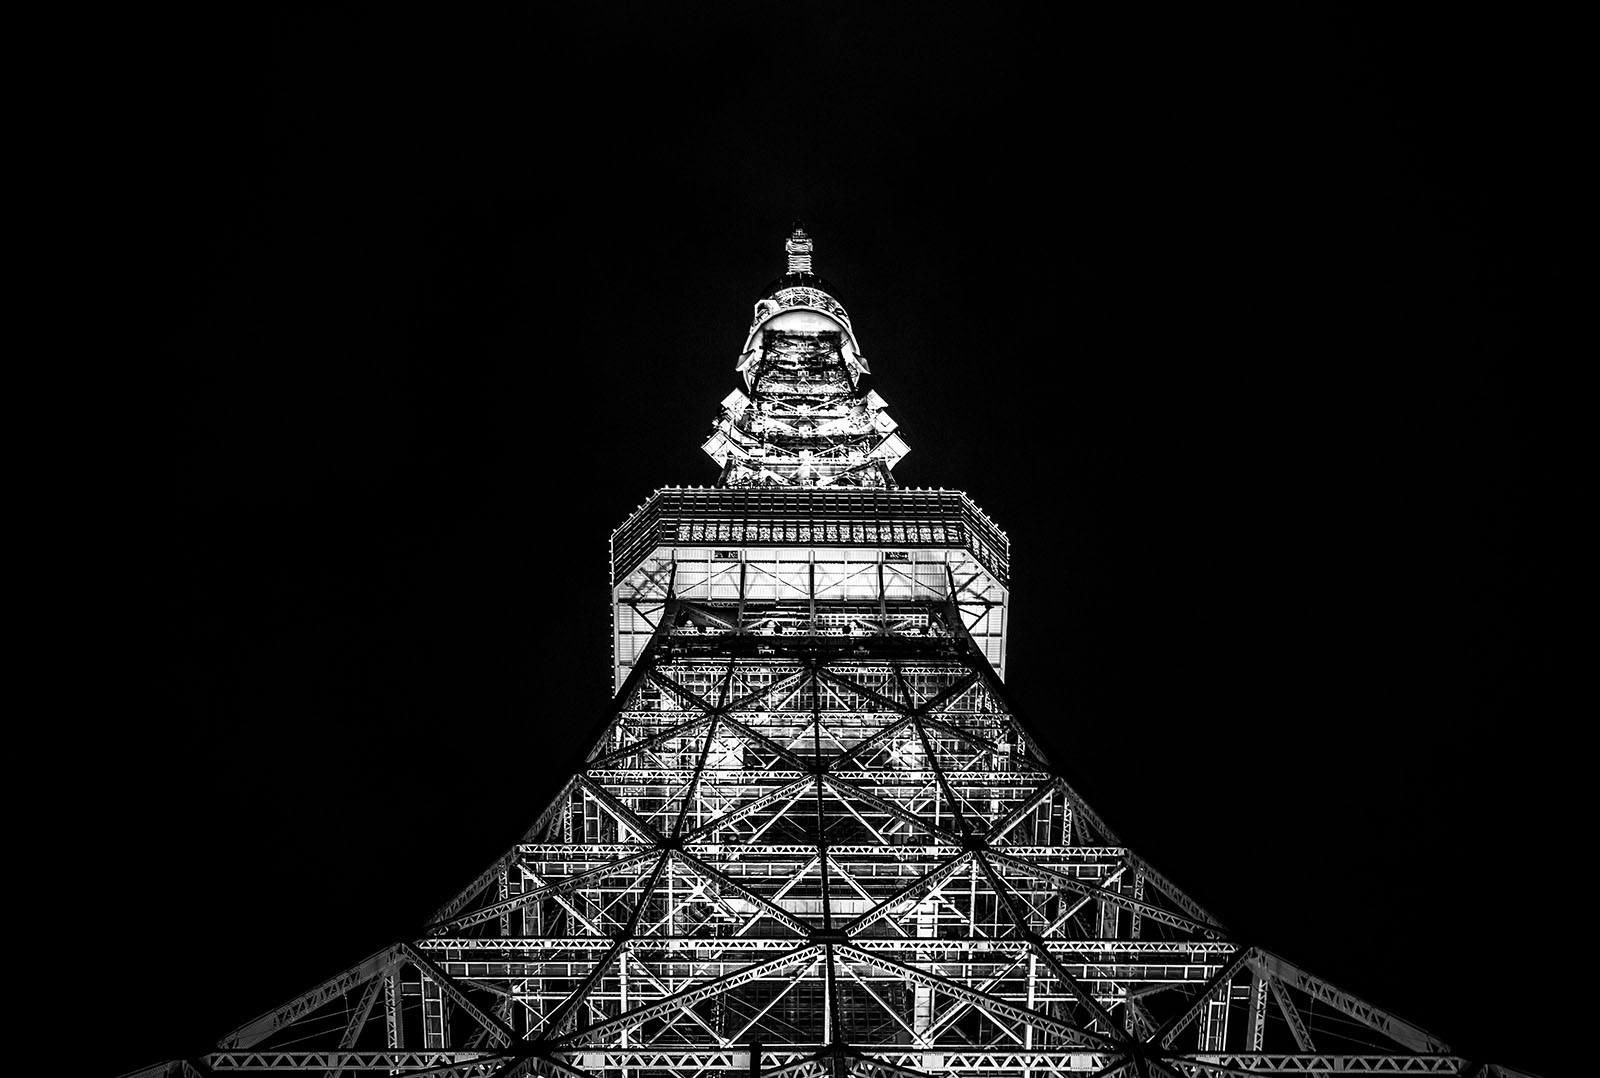 Tokyo Tower in monochrome...